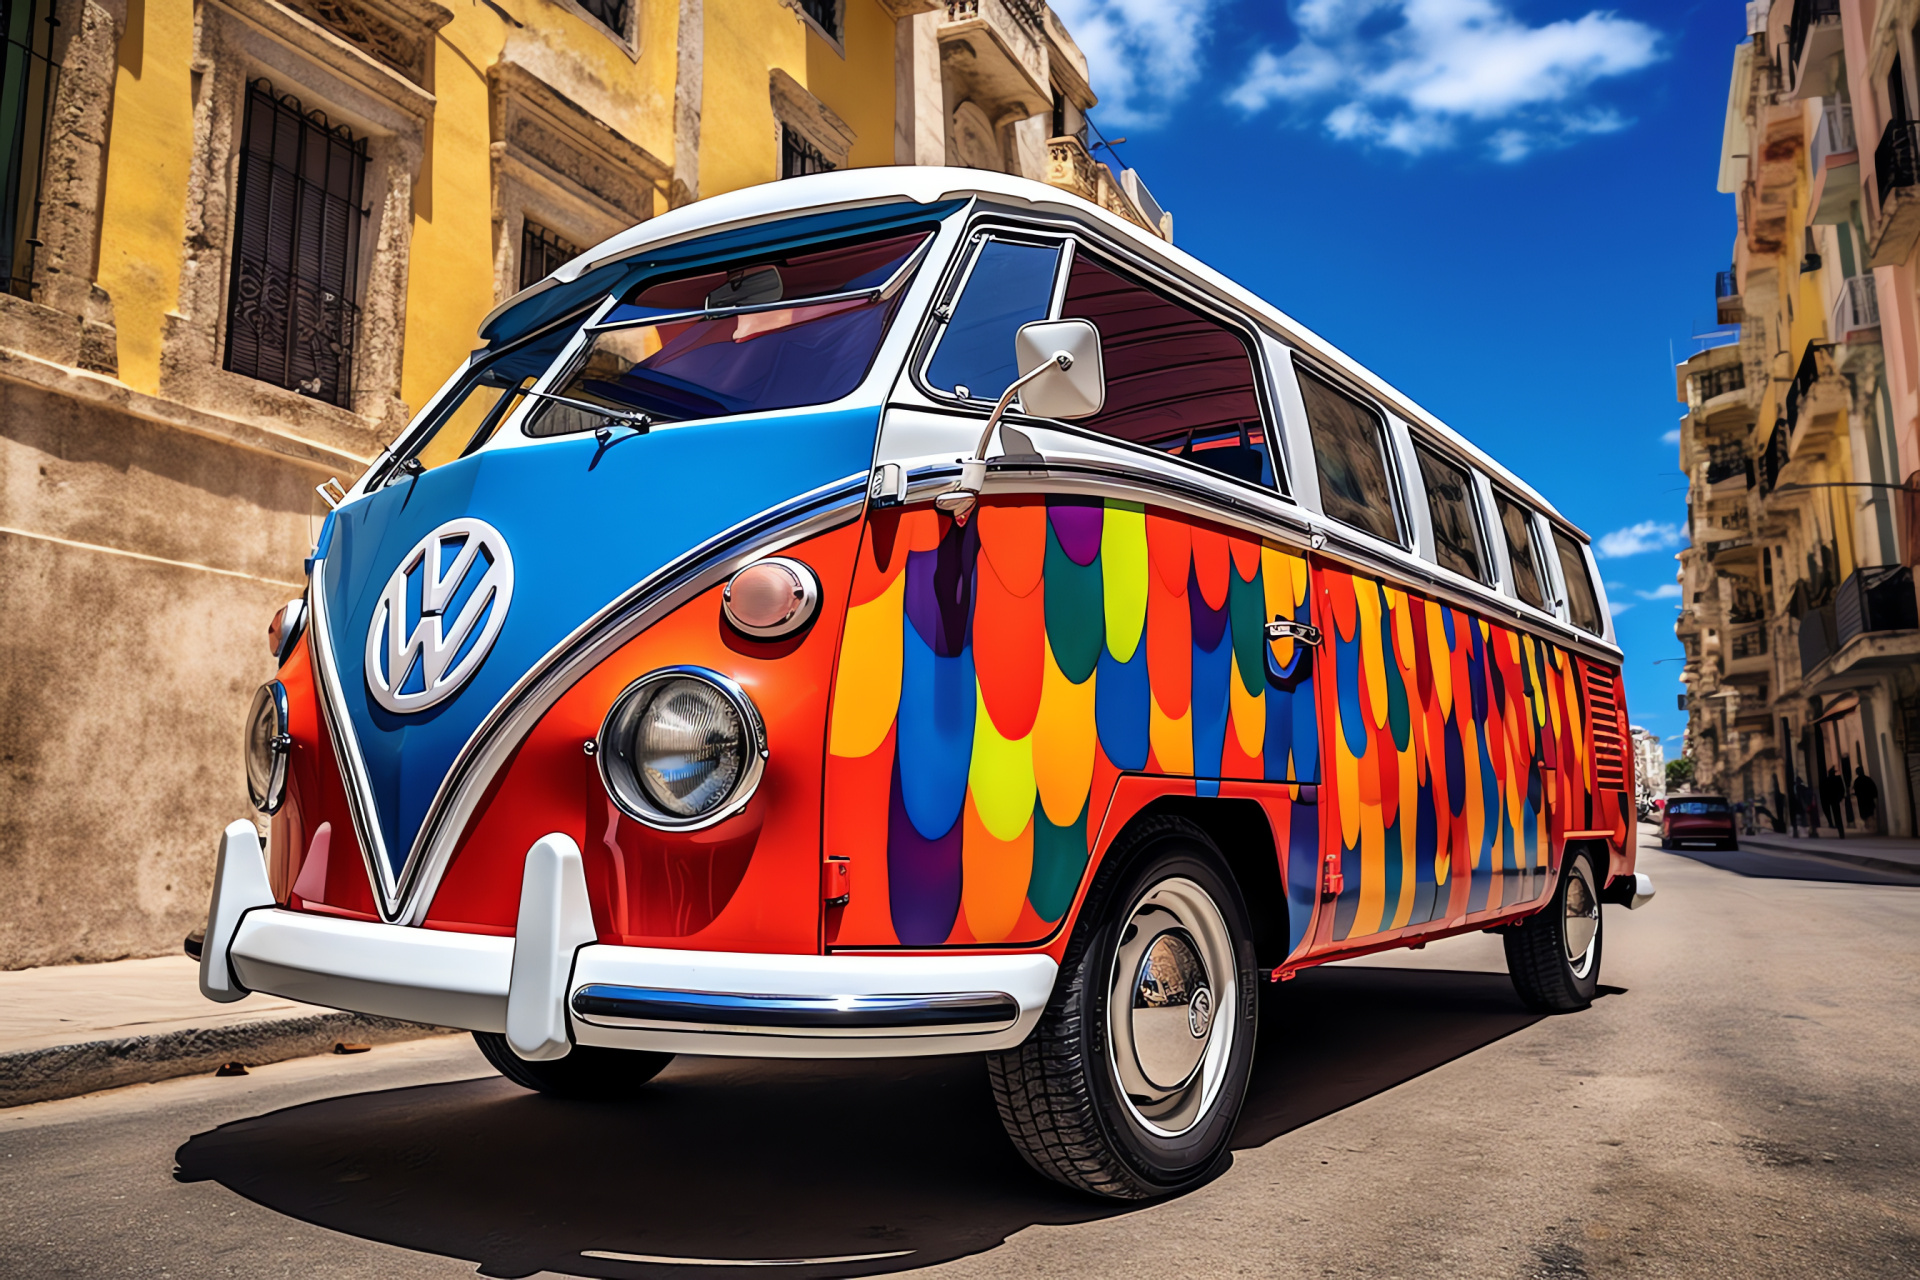 Vintage VW Bus, Cuban street scene, Nostalgic paint details, Latin culture elements, Time-honored design, HD Desktop Wallpaper